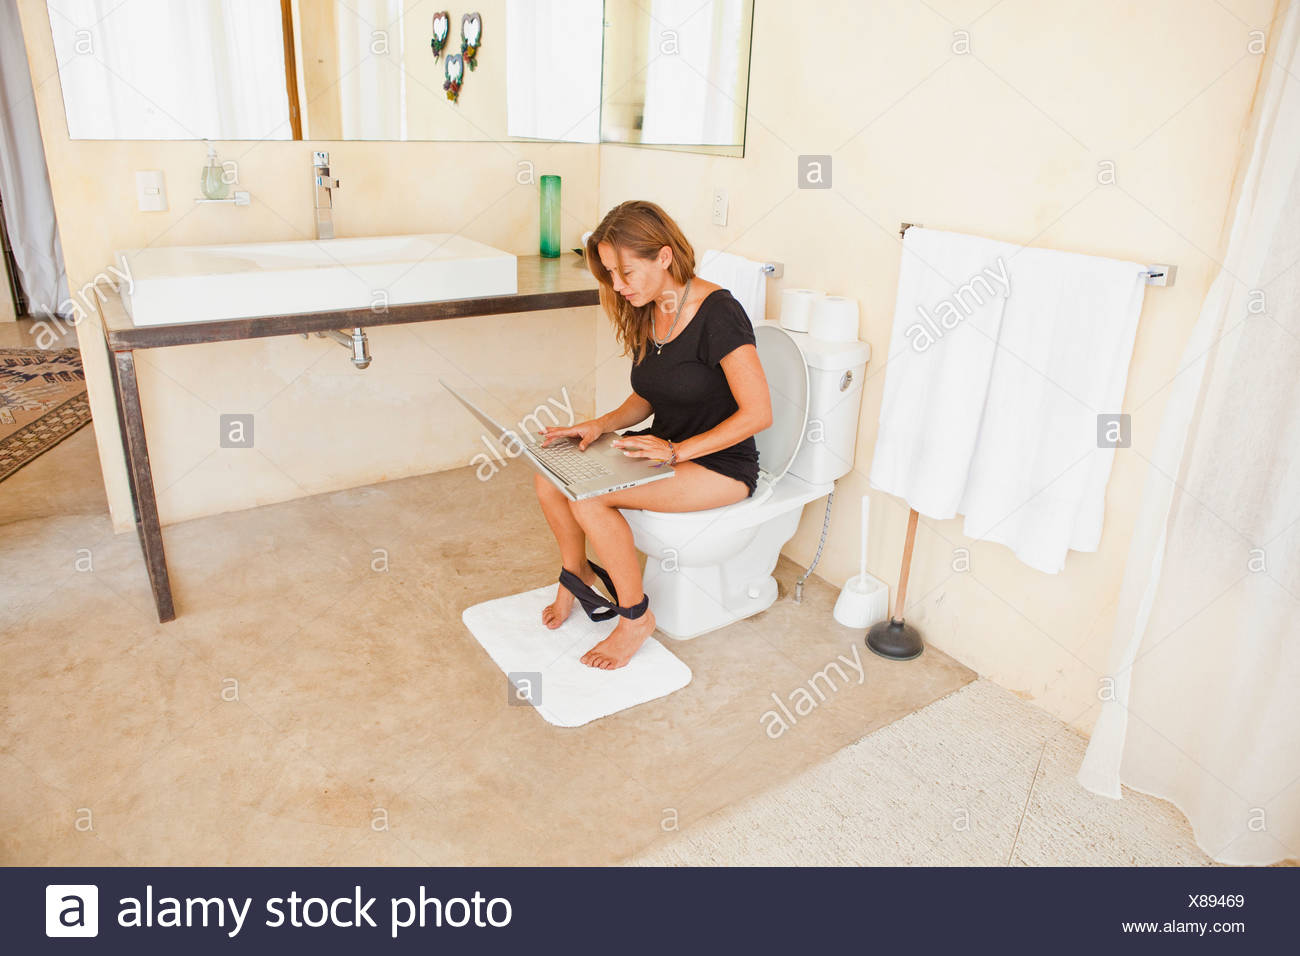 Woman On Laptop In Bathroom Stock Photo 280484017 Alamy